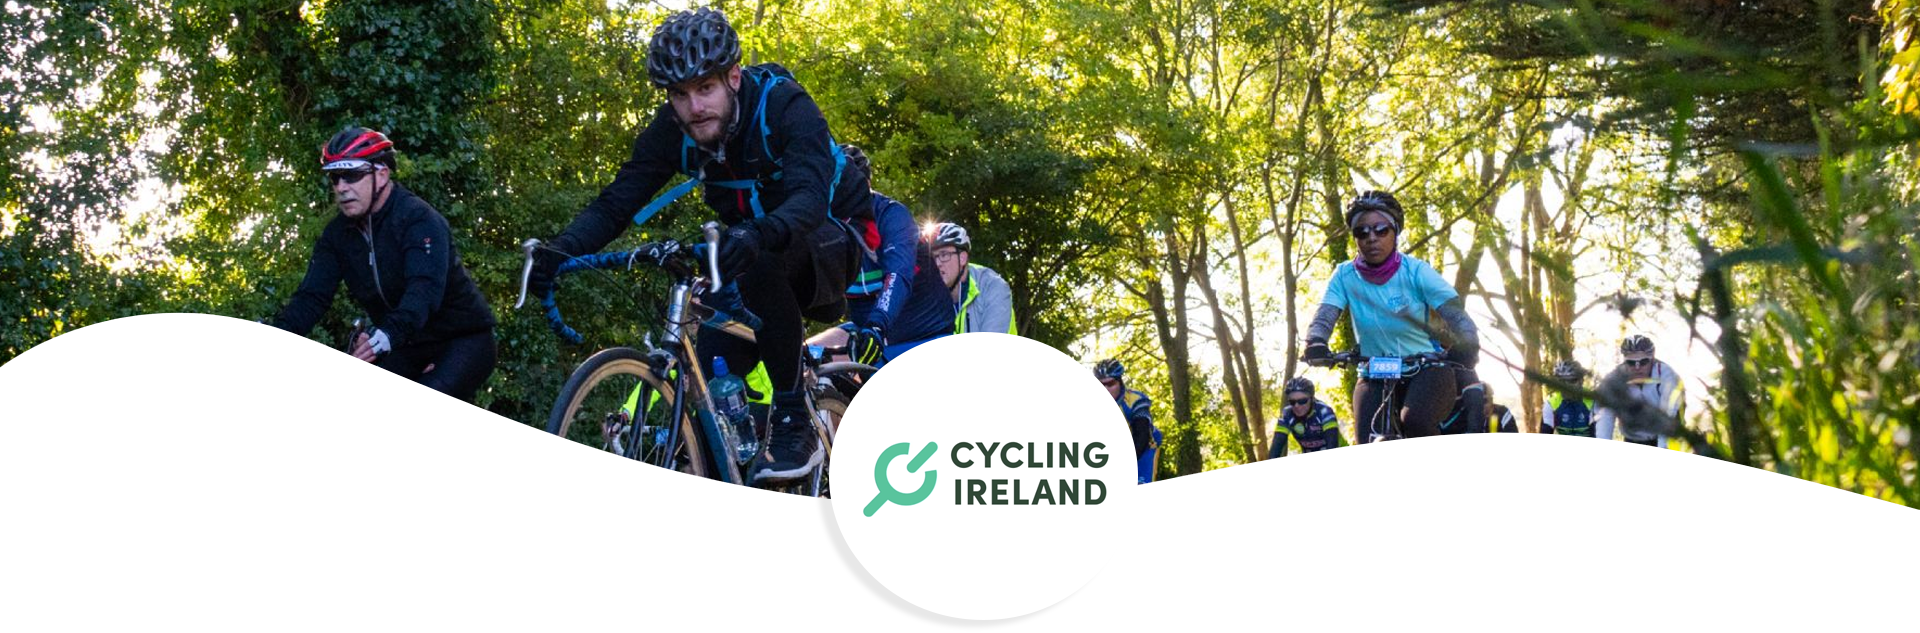 Cycling Ireland en Cyql starten pilot